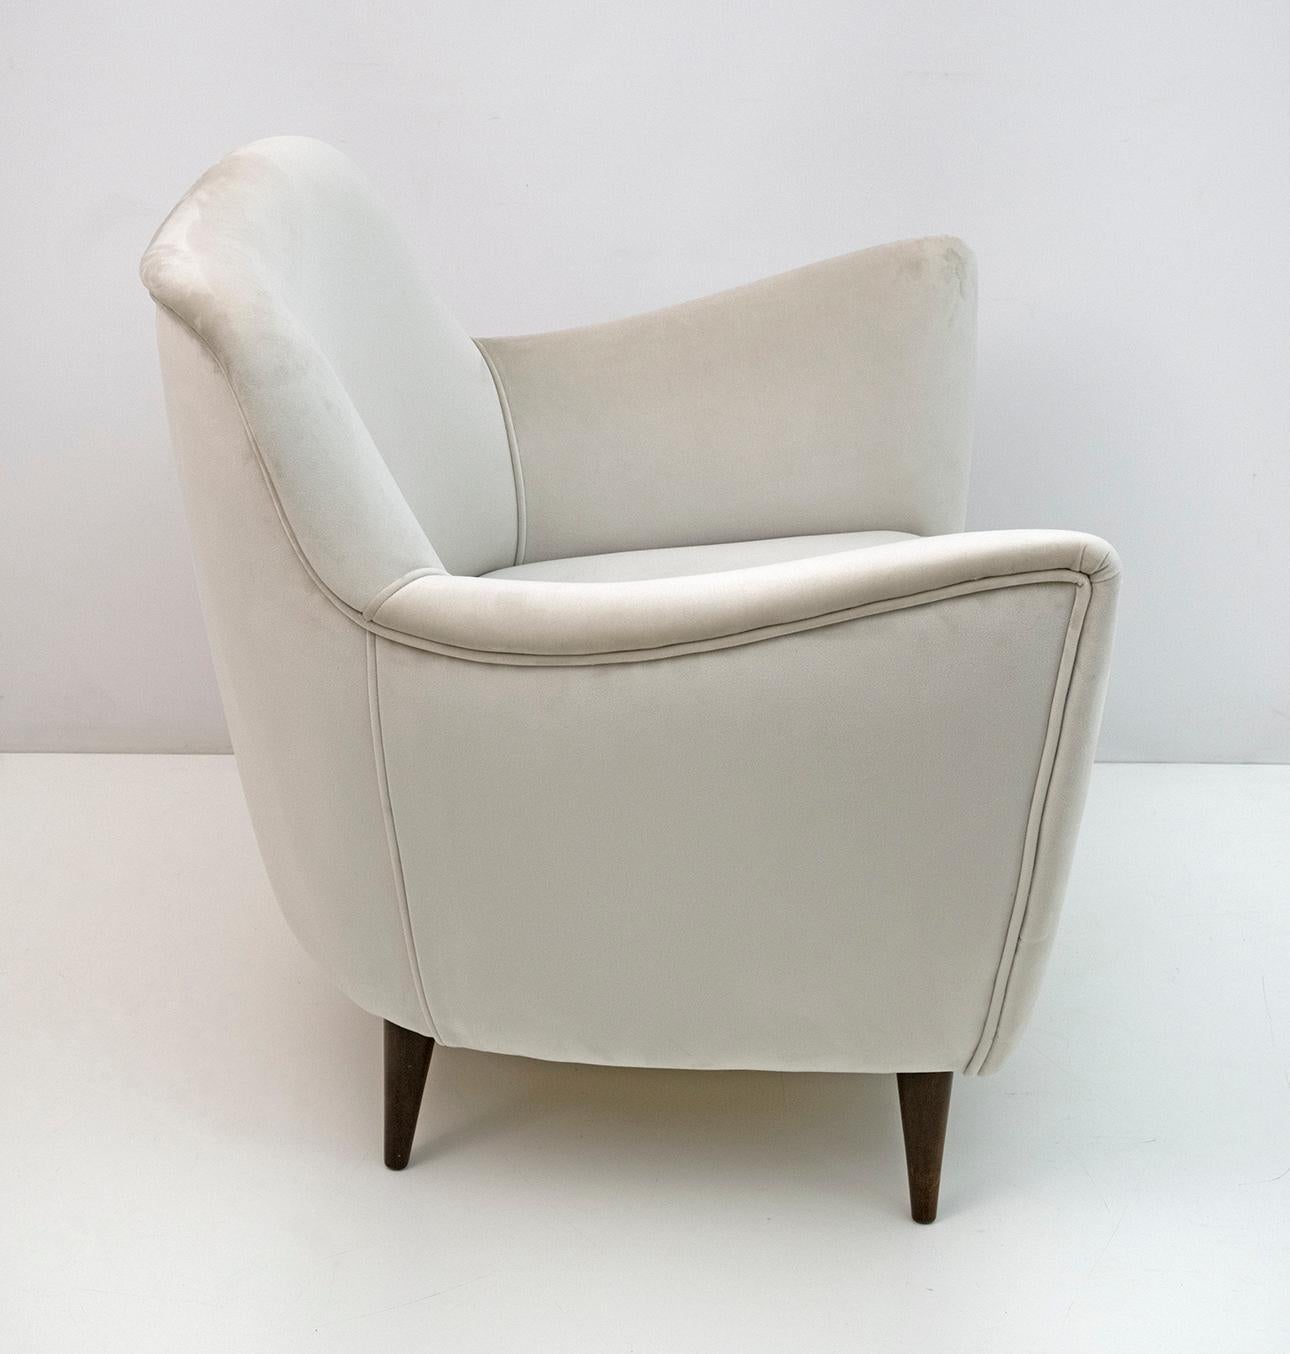 G. Veronesi Mid-Century Modern Italian Velvet Armchair by ISA, 1950s For Sale 3